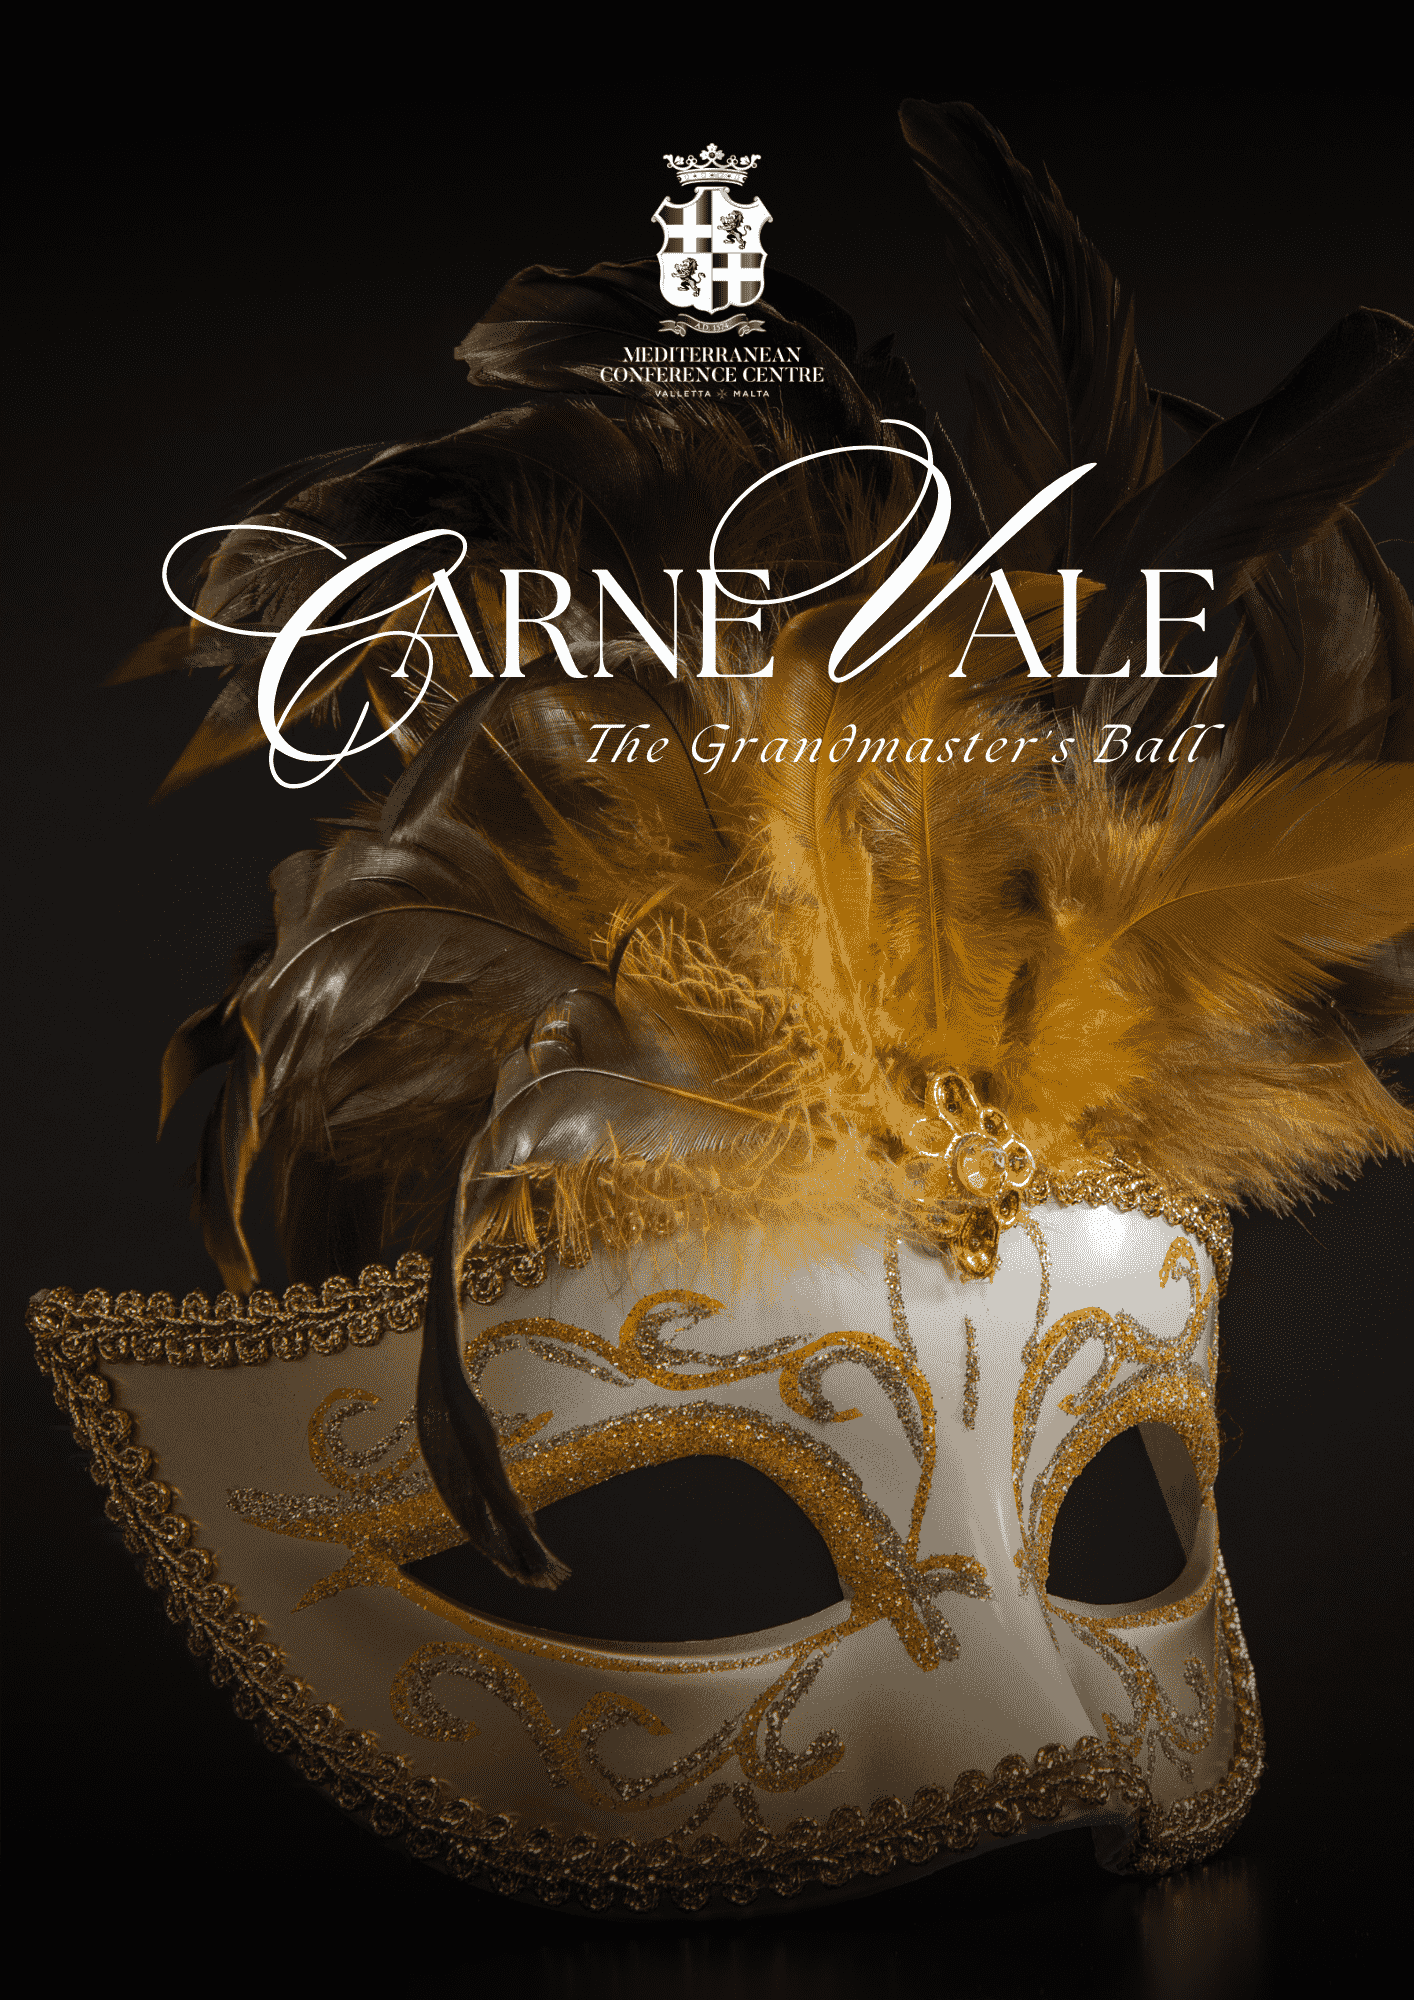 Carnevale - The Grandmaster's Ball poster